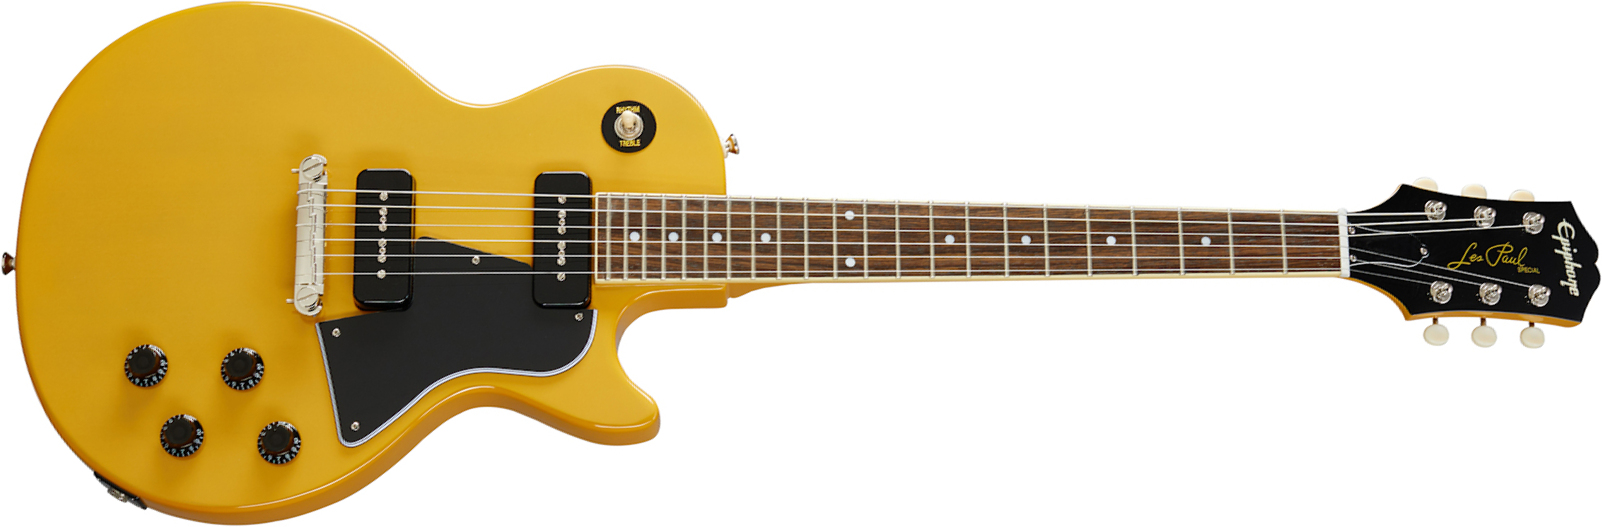 Epiphone Les Paul Special 2p90 Ht Lau - Tv Yellow - Single cut electric guitar - Main picture